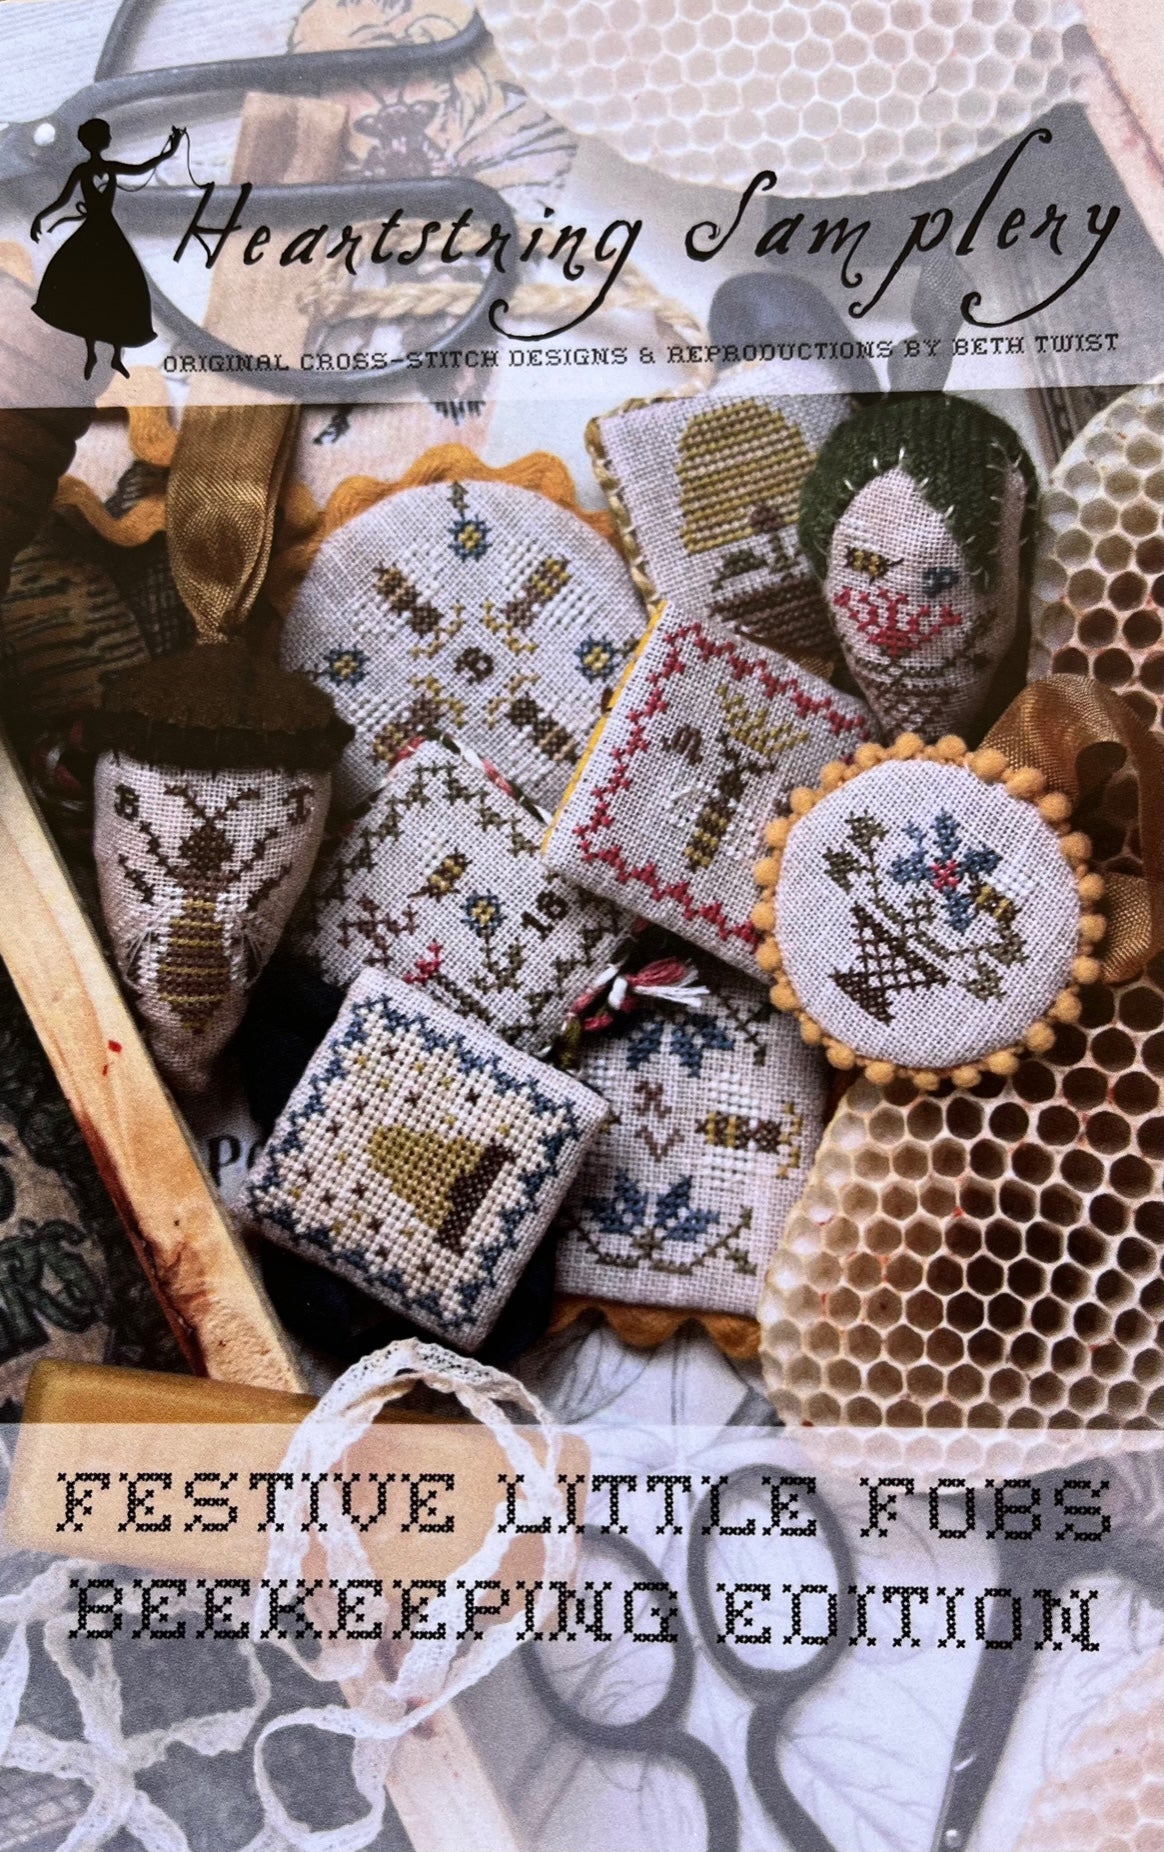 Festive Little Fobs Beekeeping Edition Cross Stitch Pattern by Heartstring Samplery